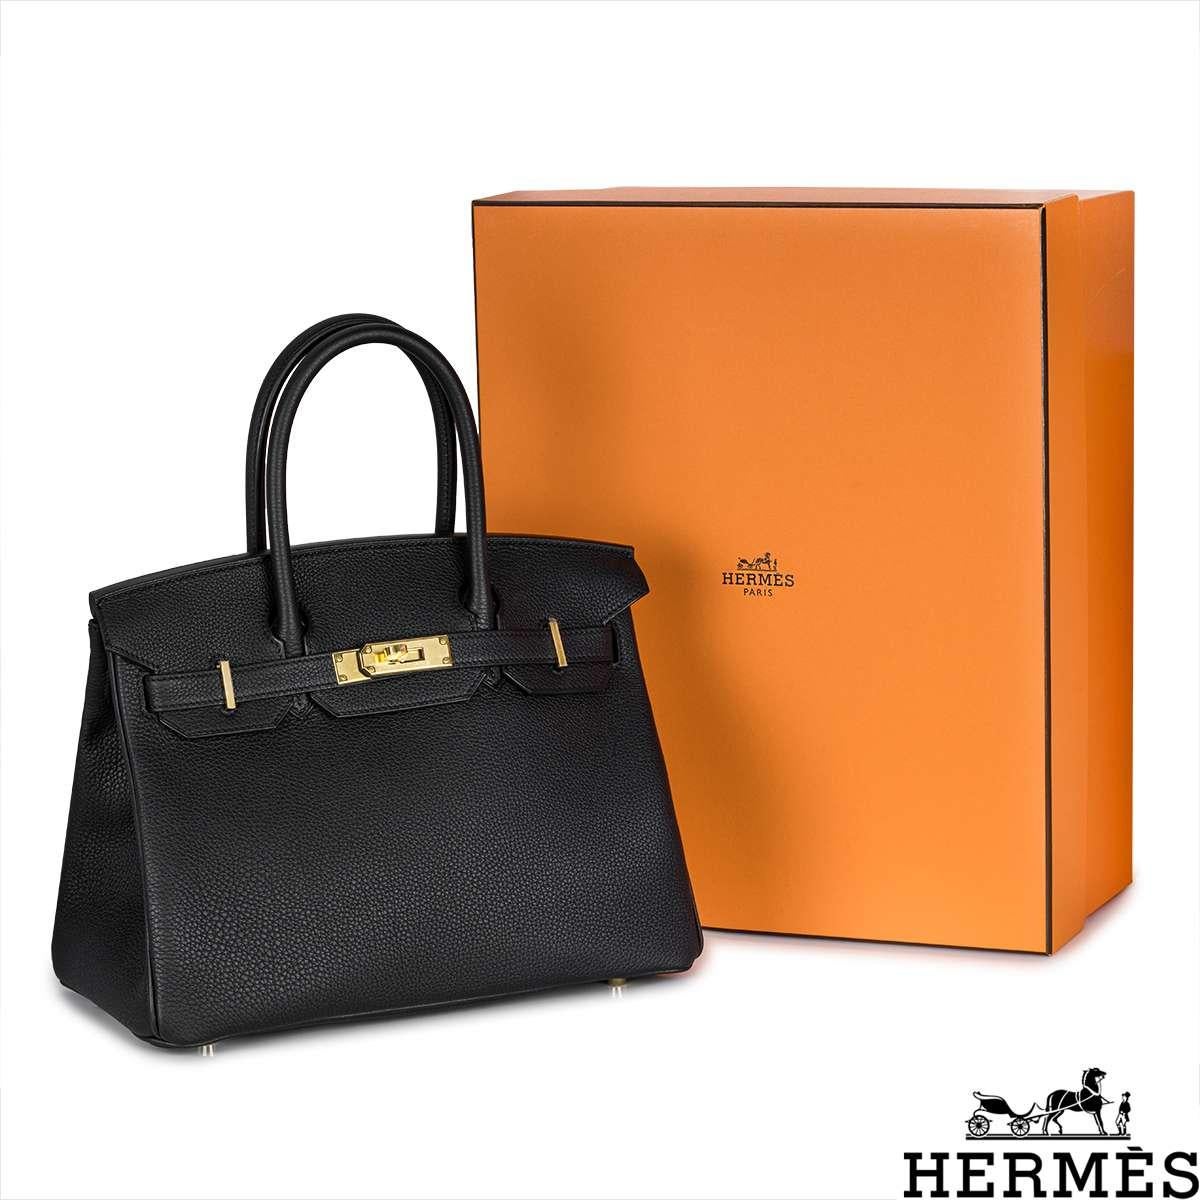 Hermès Birkin 30cm Noir Veau Togo GHW For Sale 5